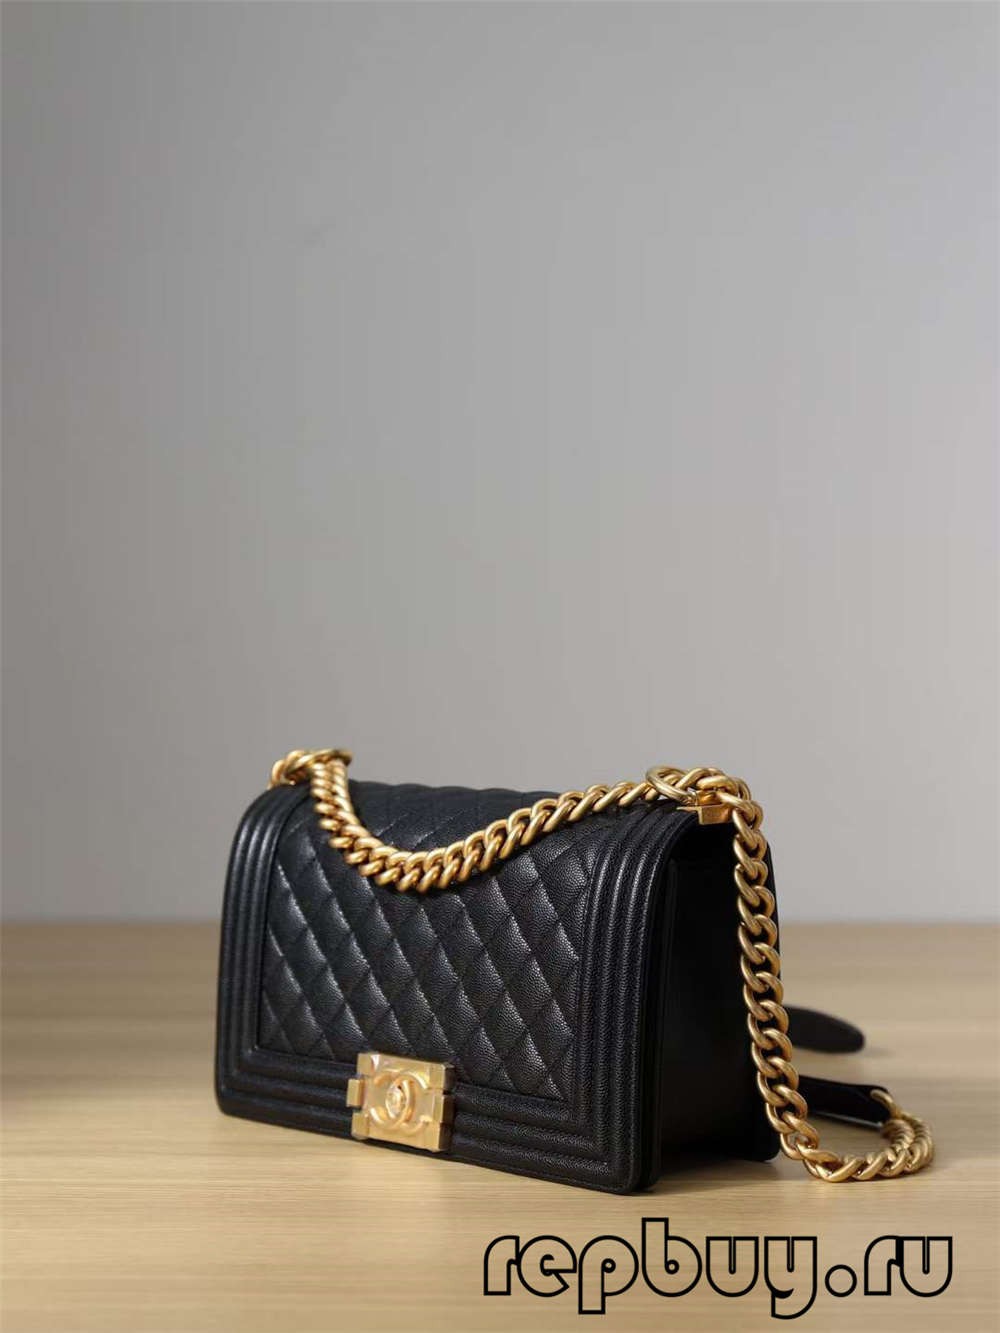 Chanel Leboy Top Replica Handbag Medium Gold Buckle (2022 Edition)-Ole Lelei Sili Fake Louis Vuitton Bag Faleoloa i luga ole laiga, Replica designer bag ru